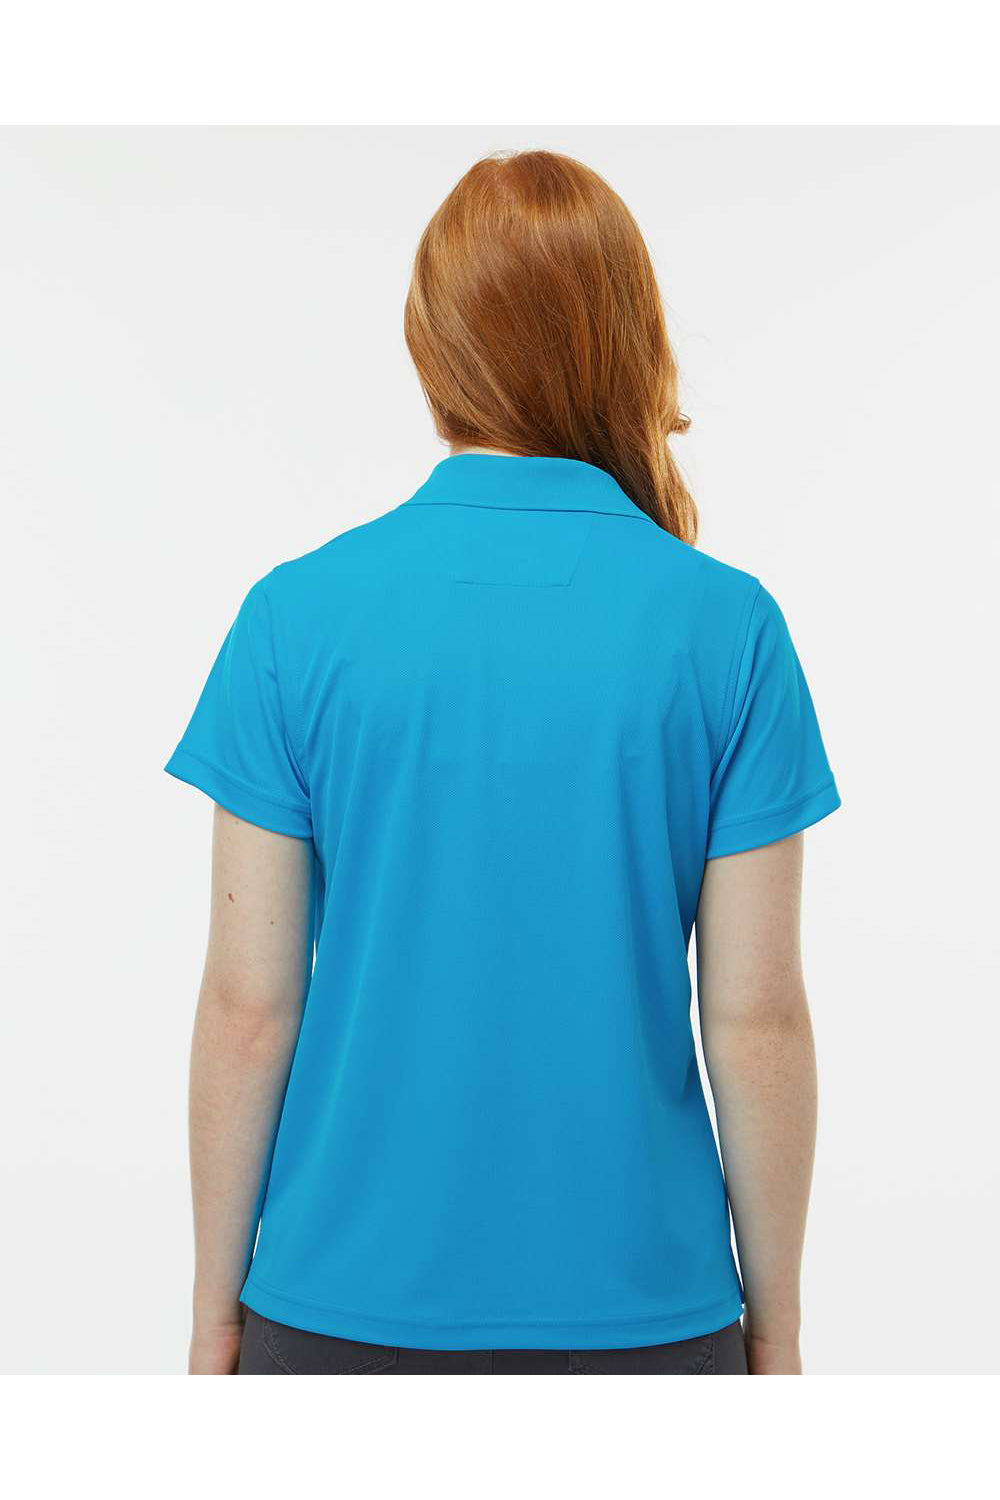 Paragon 104 Womens Saratoga Performance Mini Mesh Short Sleeve Polo Shirt Turquoise Blue Model Back